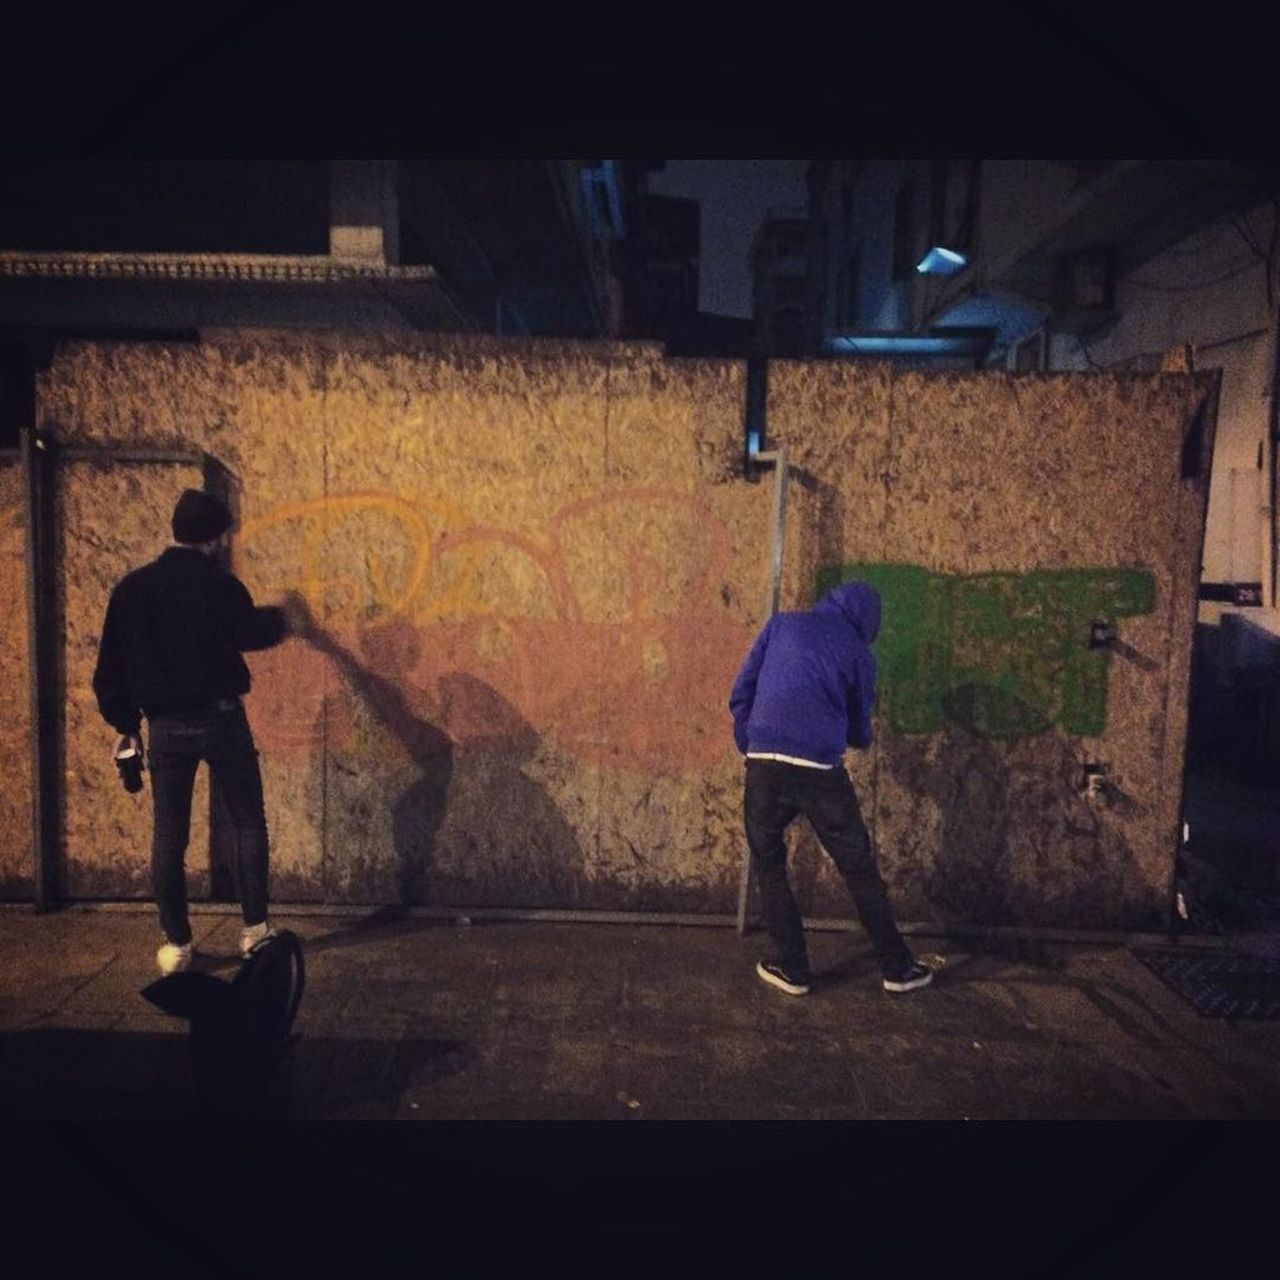  w/ @rob_colour | #graffiti #streetart #istanbulstreetart #streetartistanbul #wfist #fist by wfist https://t.co/LAbMxseTnP